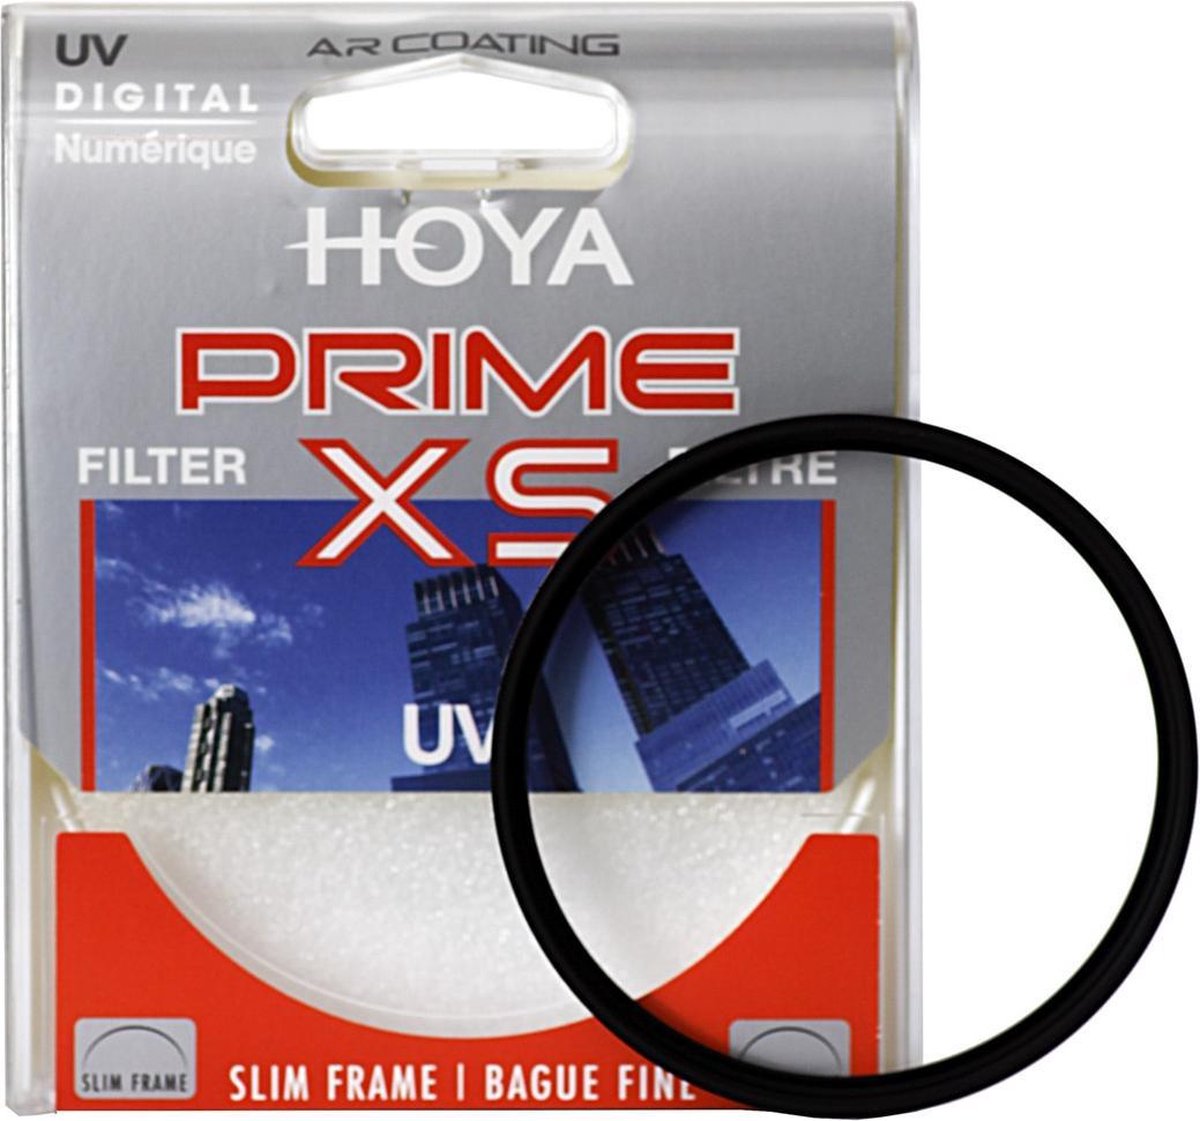 Hoya PrimeXS Multicoated UV filter 72.0MM